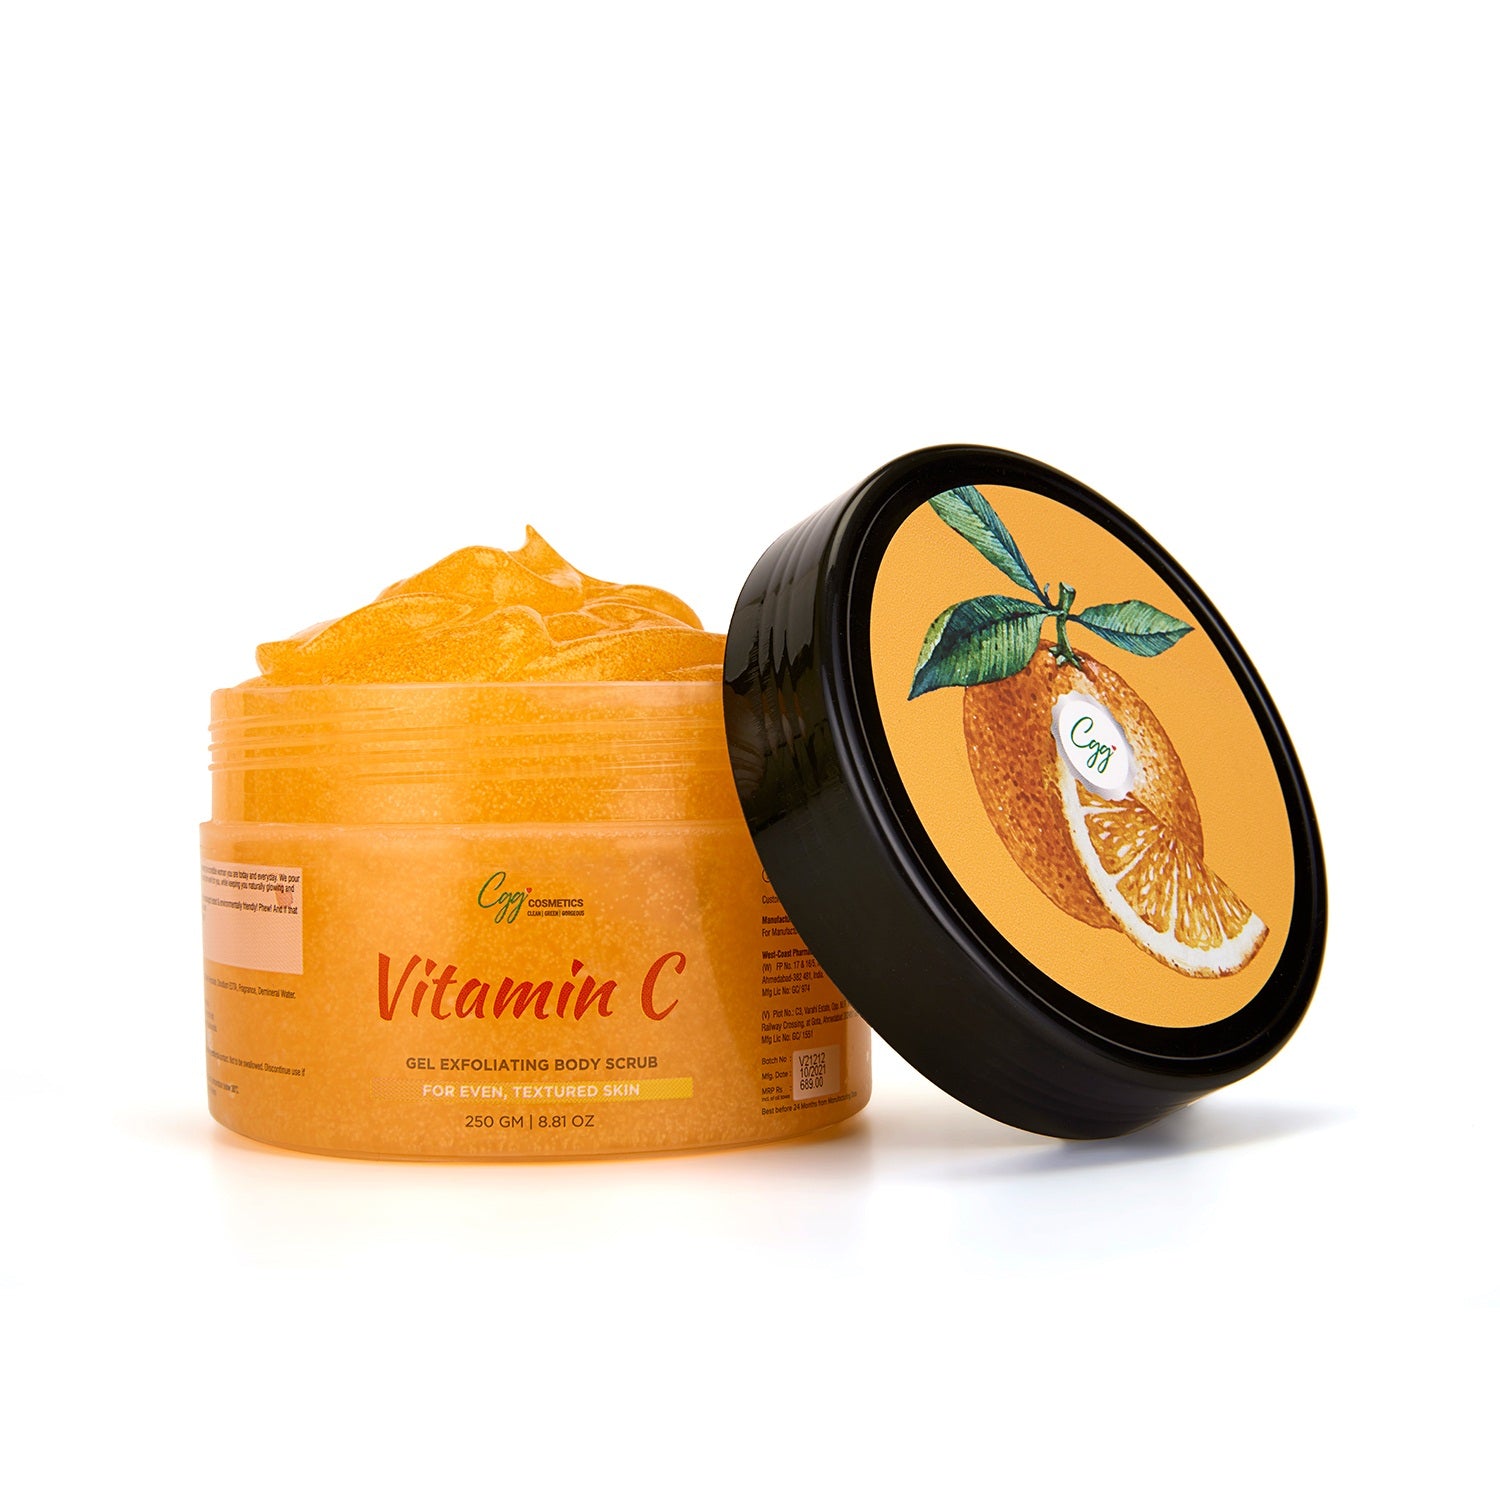 CGG Cosmetics Vitamin C Gel Exfoliating Body Scrub - Even, Textured Skin & 100% Pure Vitamin C Serum - 250gm